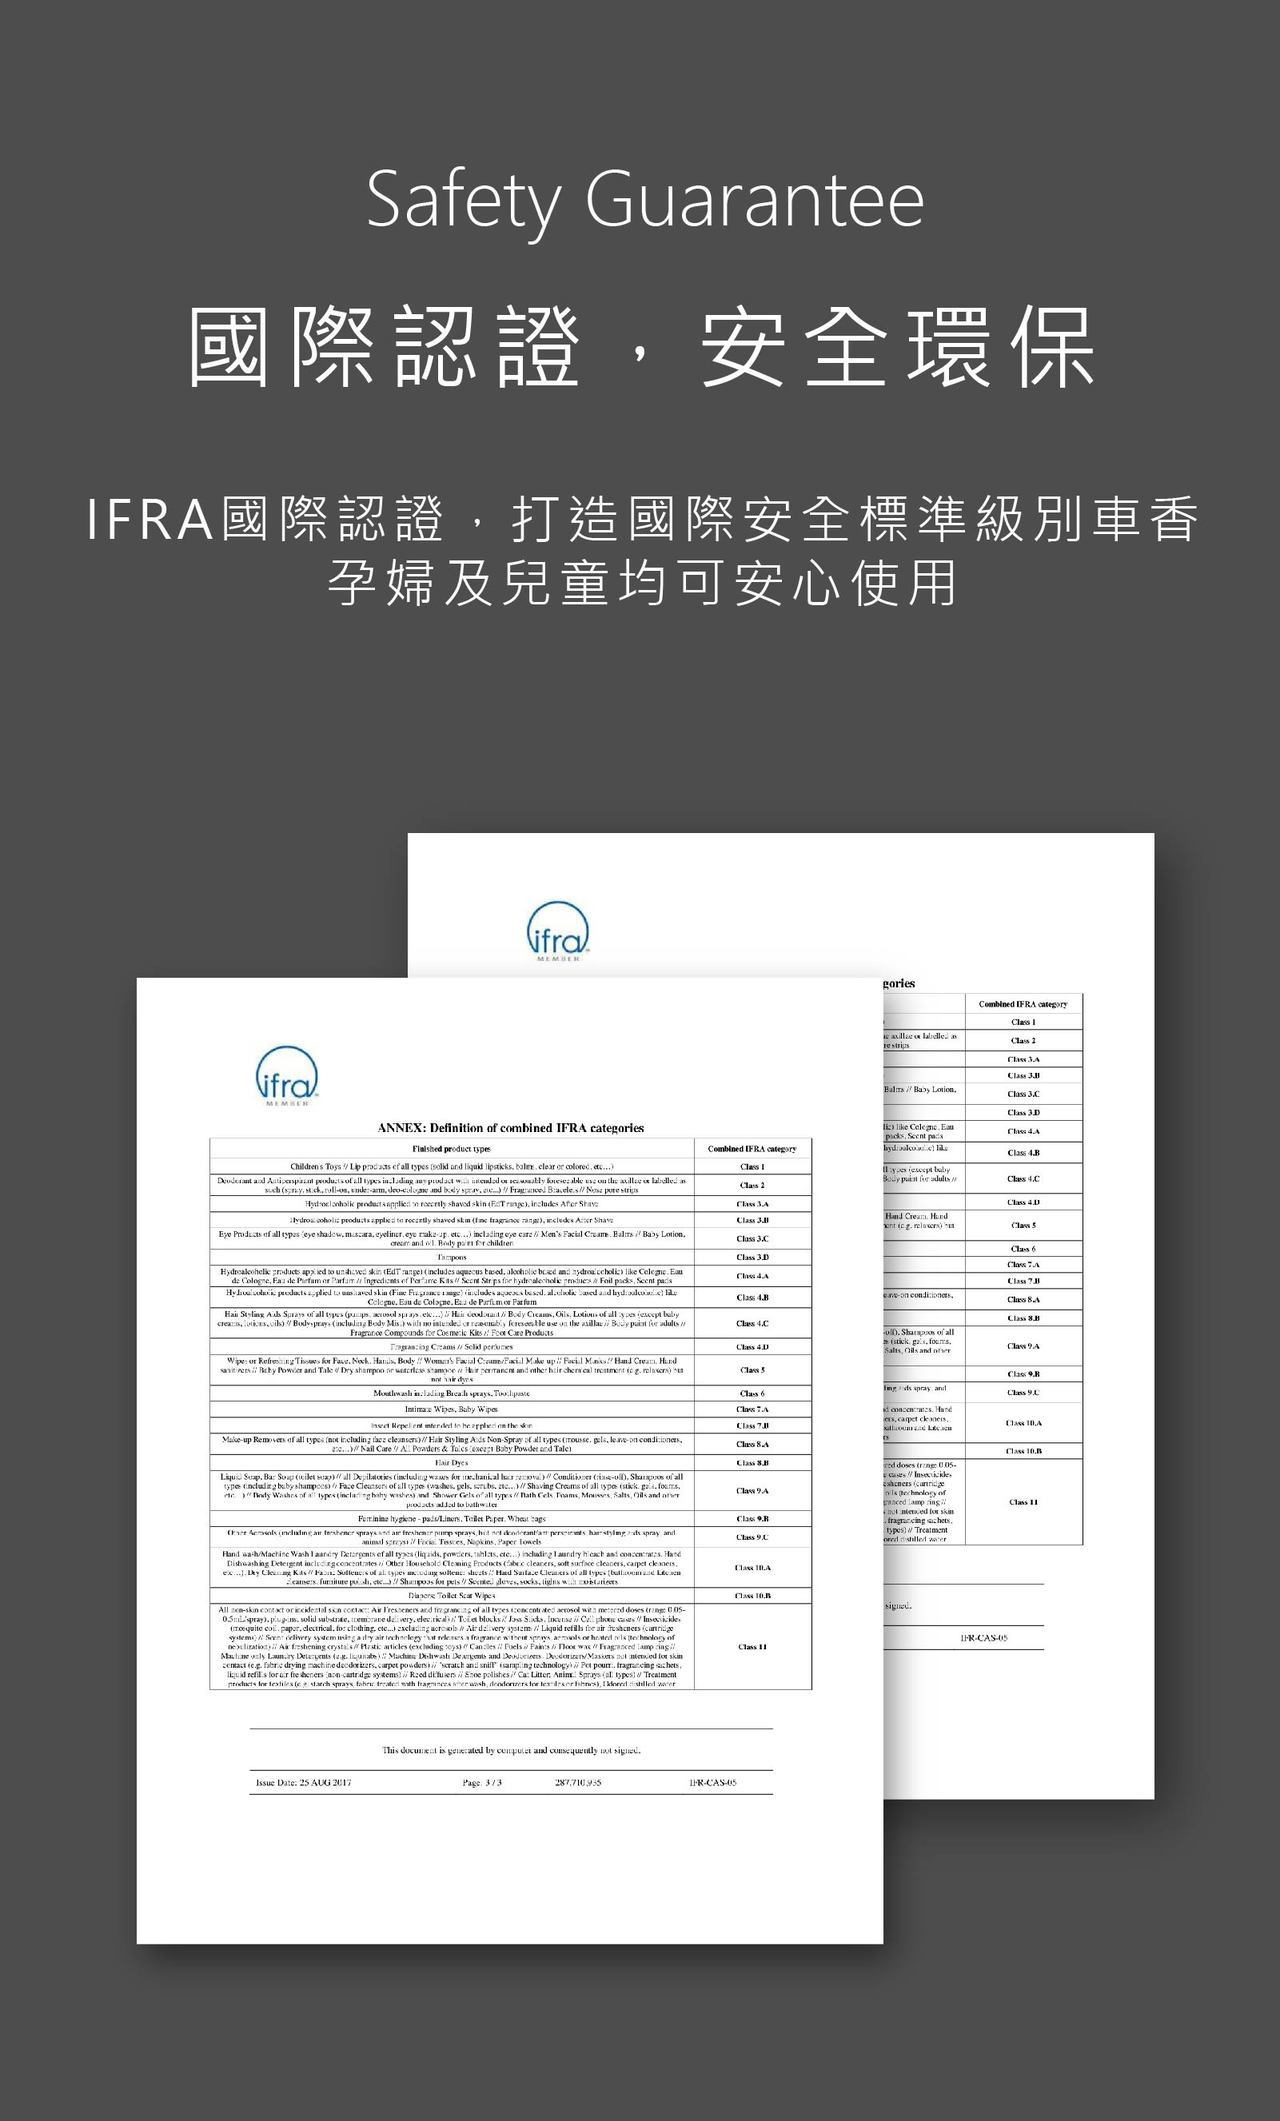 ifra 國際認證